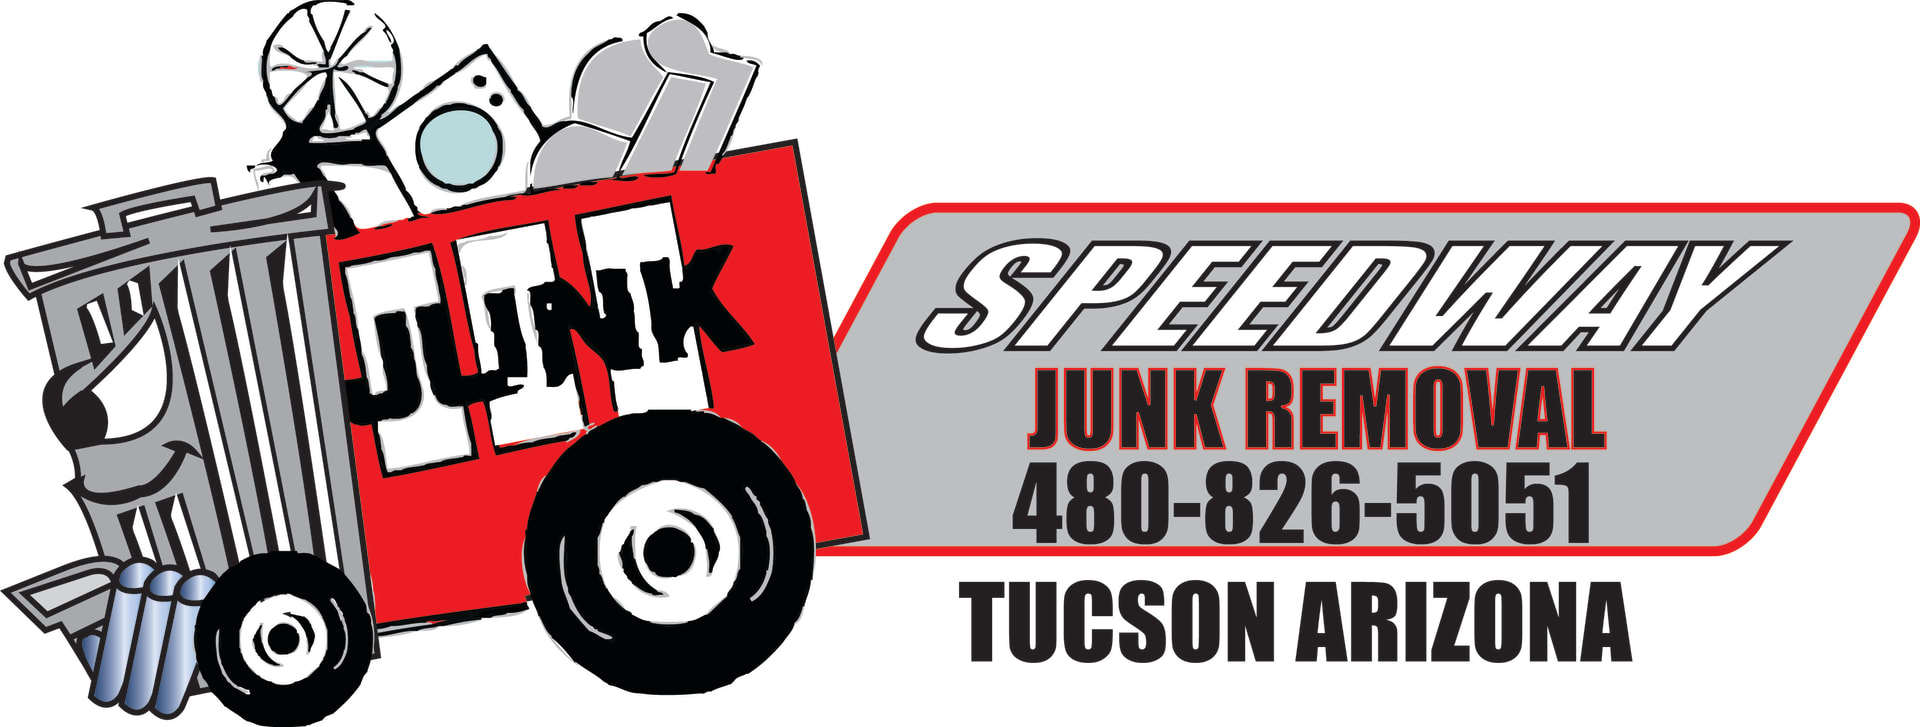 Speedway Junk Removal's Logo